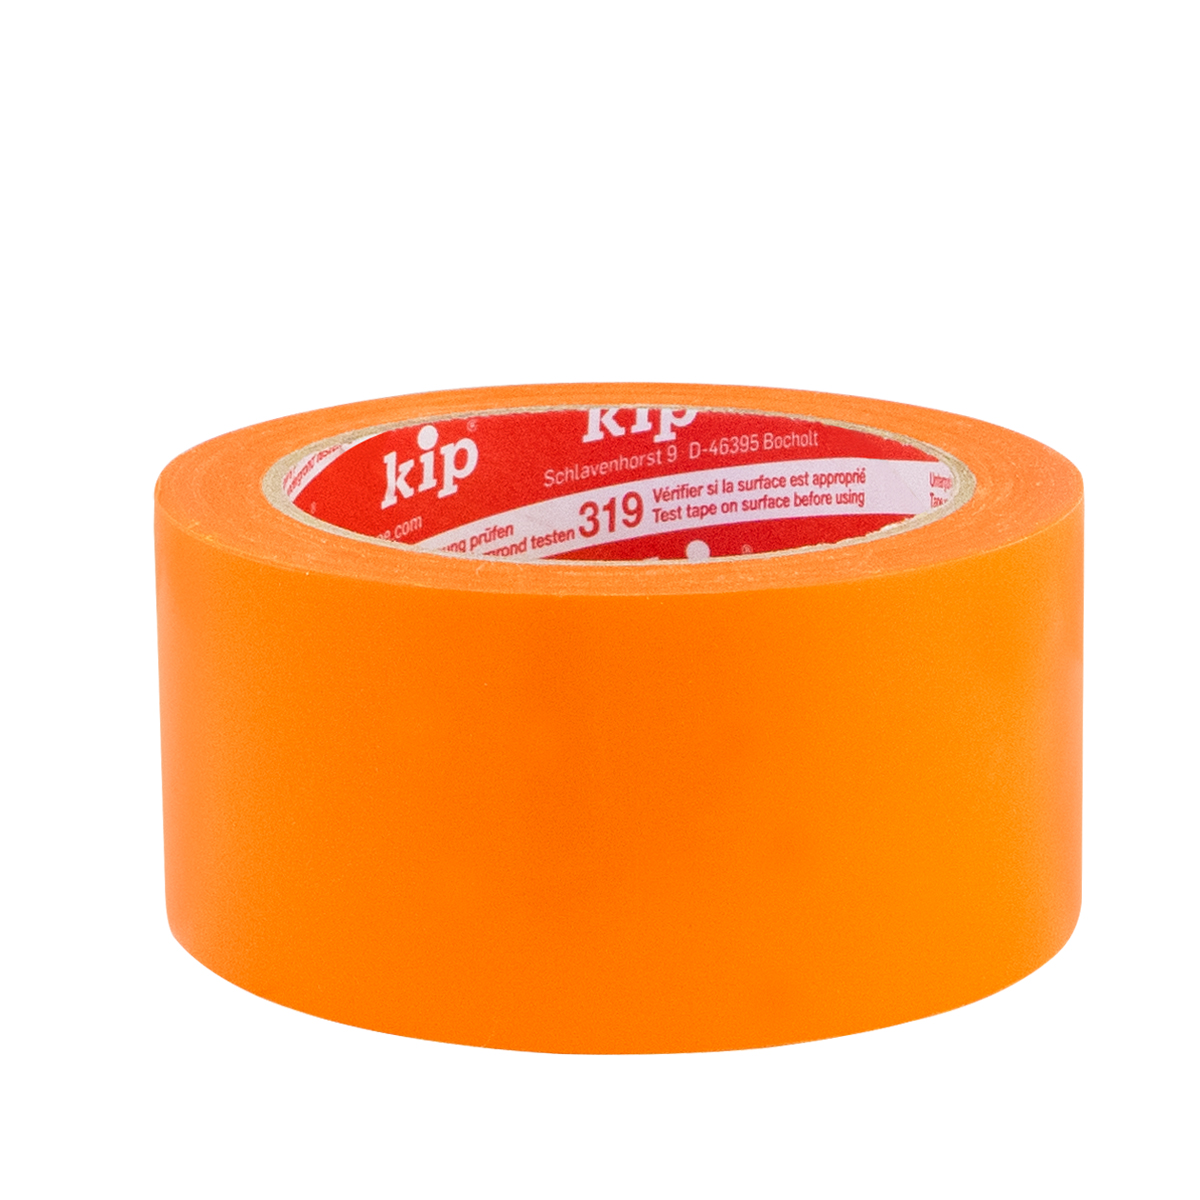 Kip 319 PE-Schutzband 50mmx33m, orange Premium PE-Band